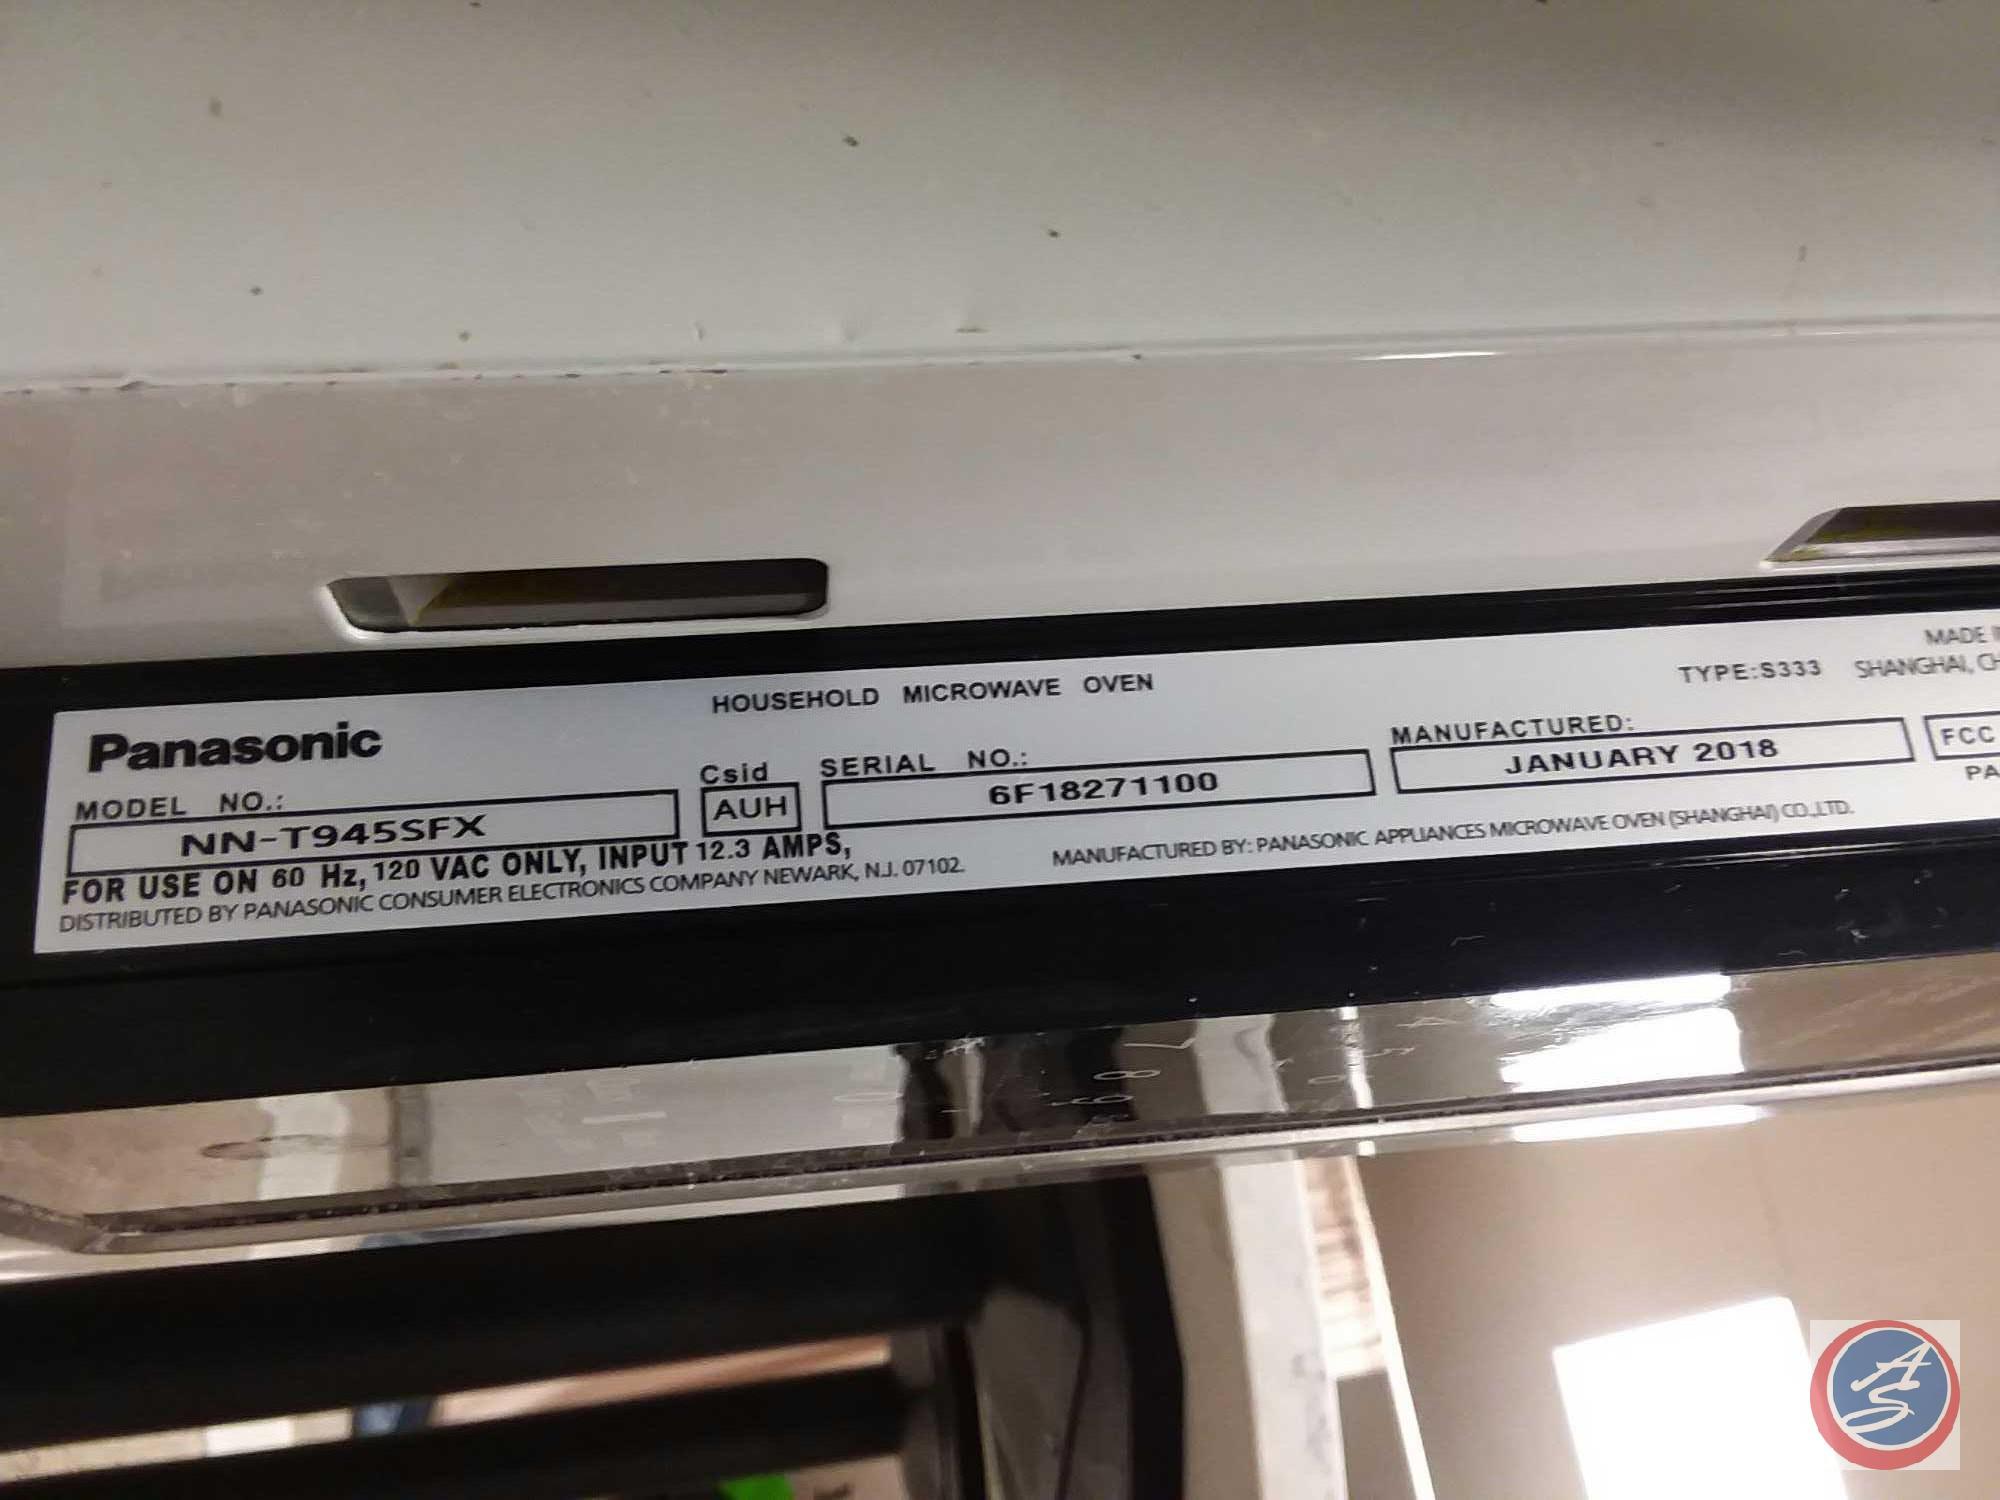 Panasonic 1250 Watts Household Microwave Oven Model No. NN-T945SFX